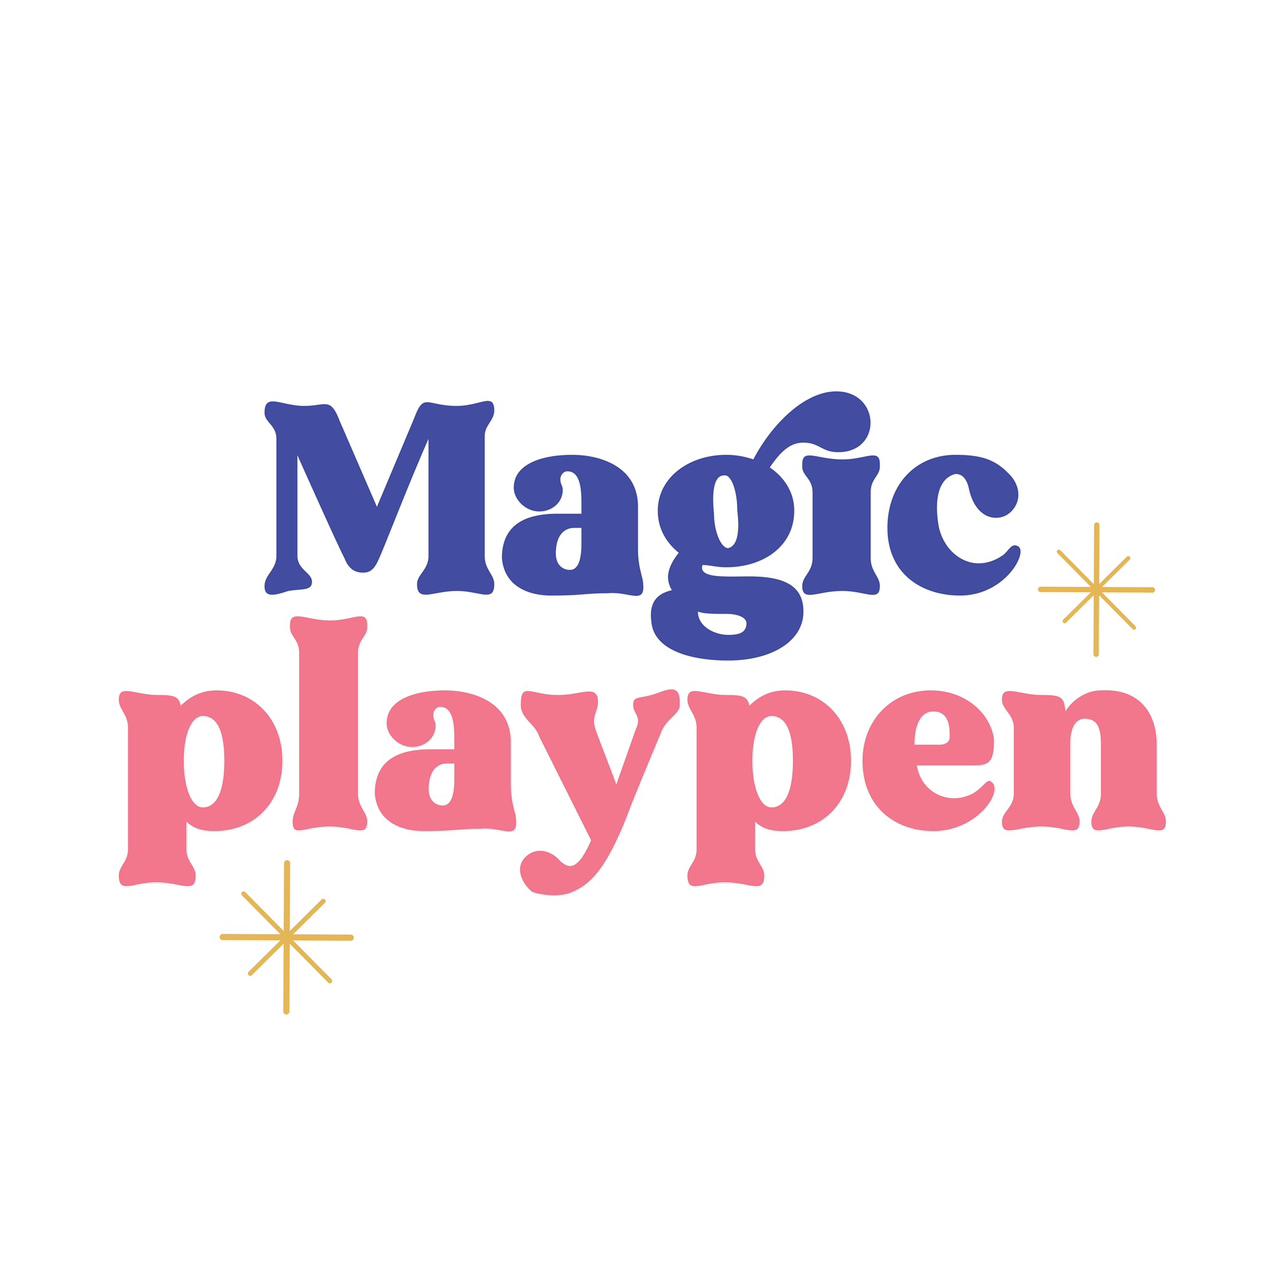 magicplaypen's images